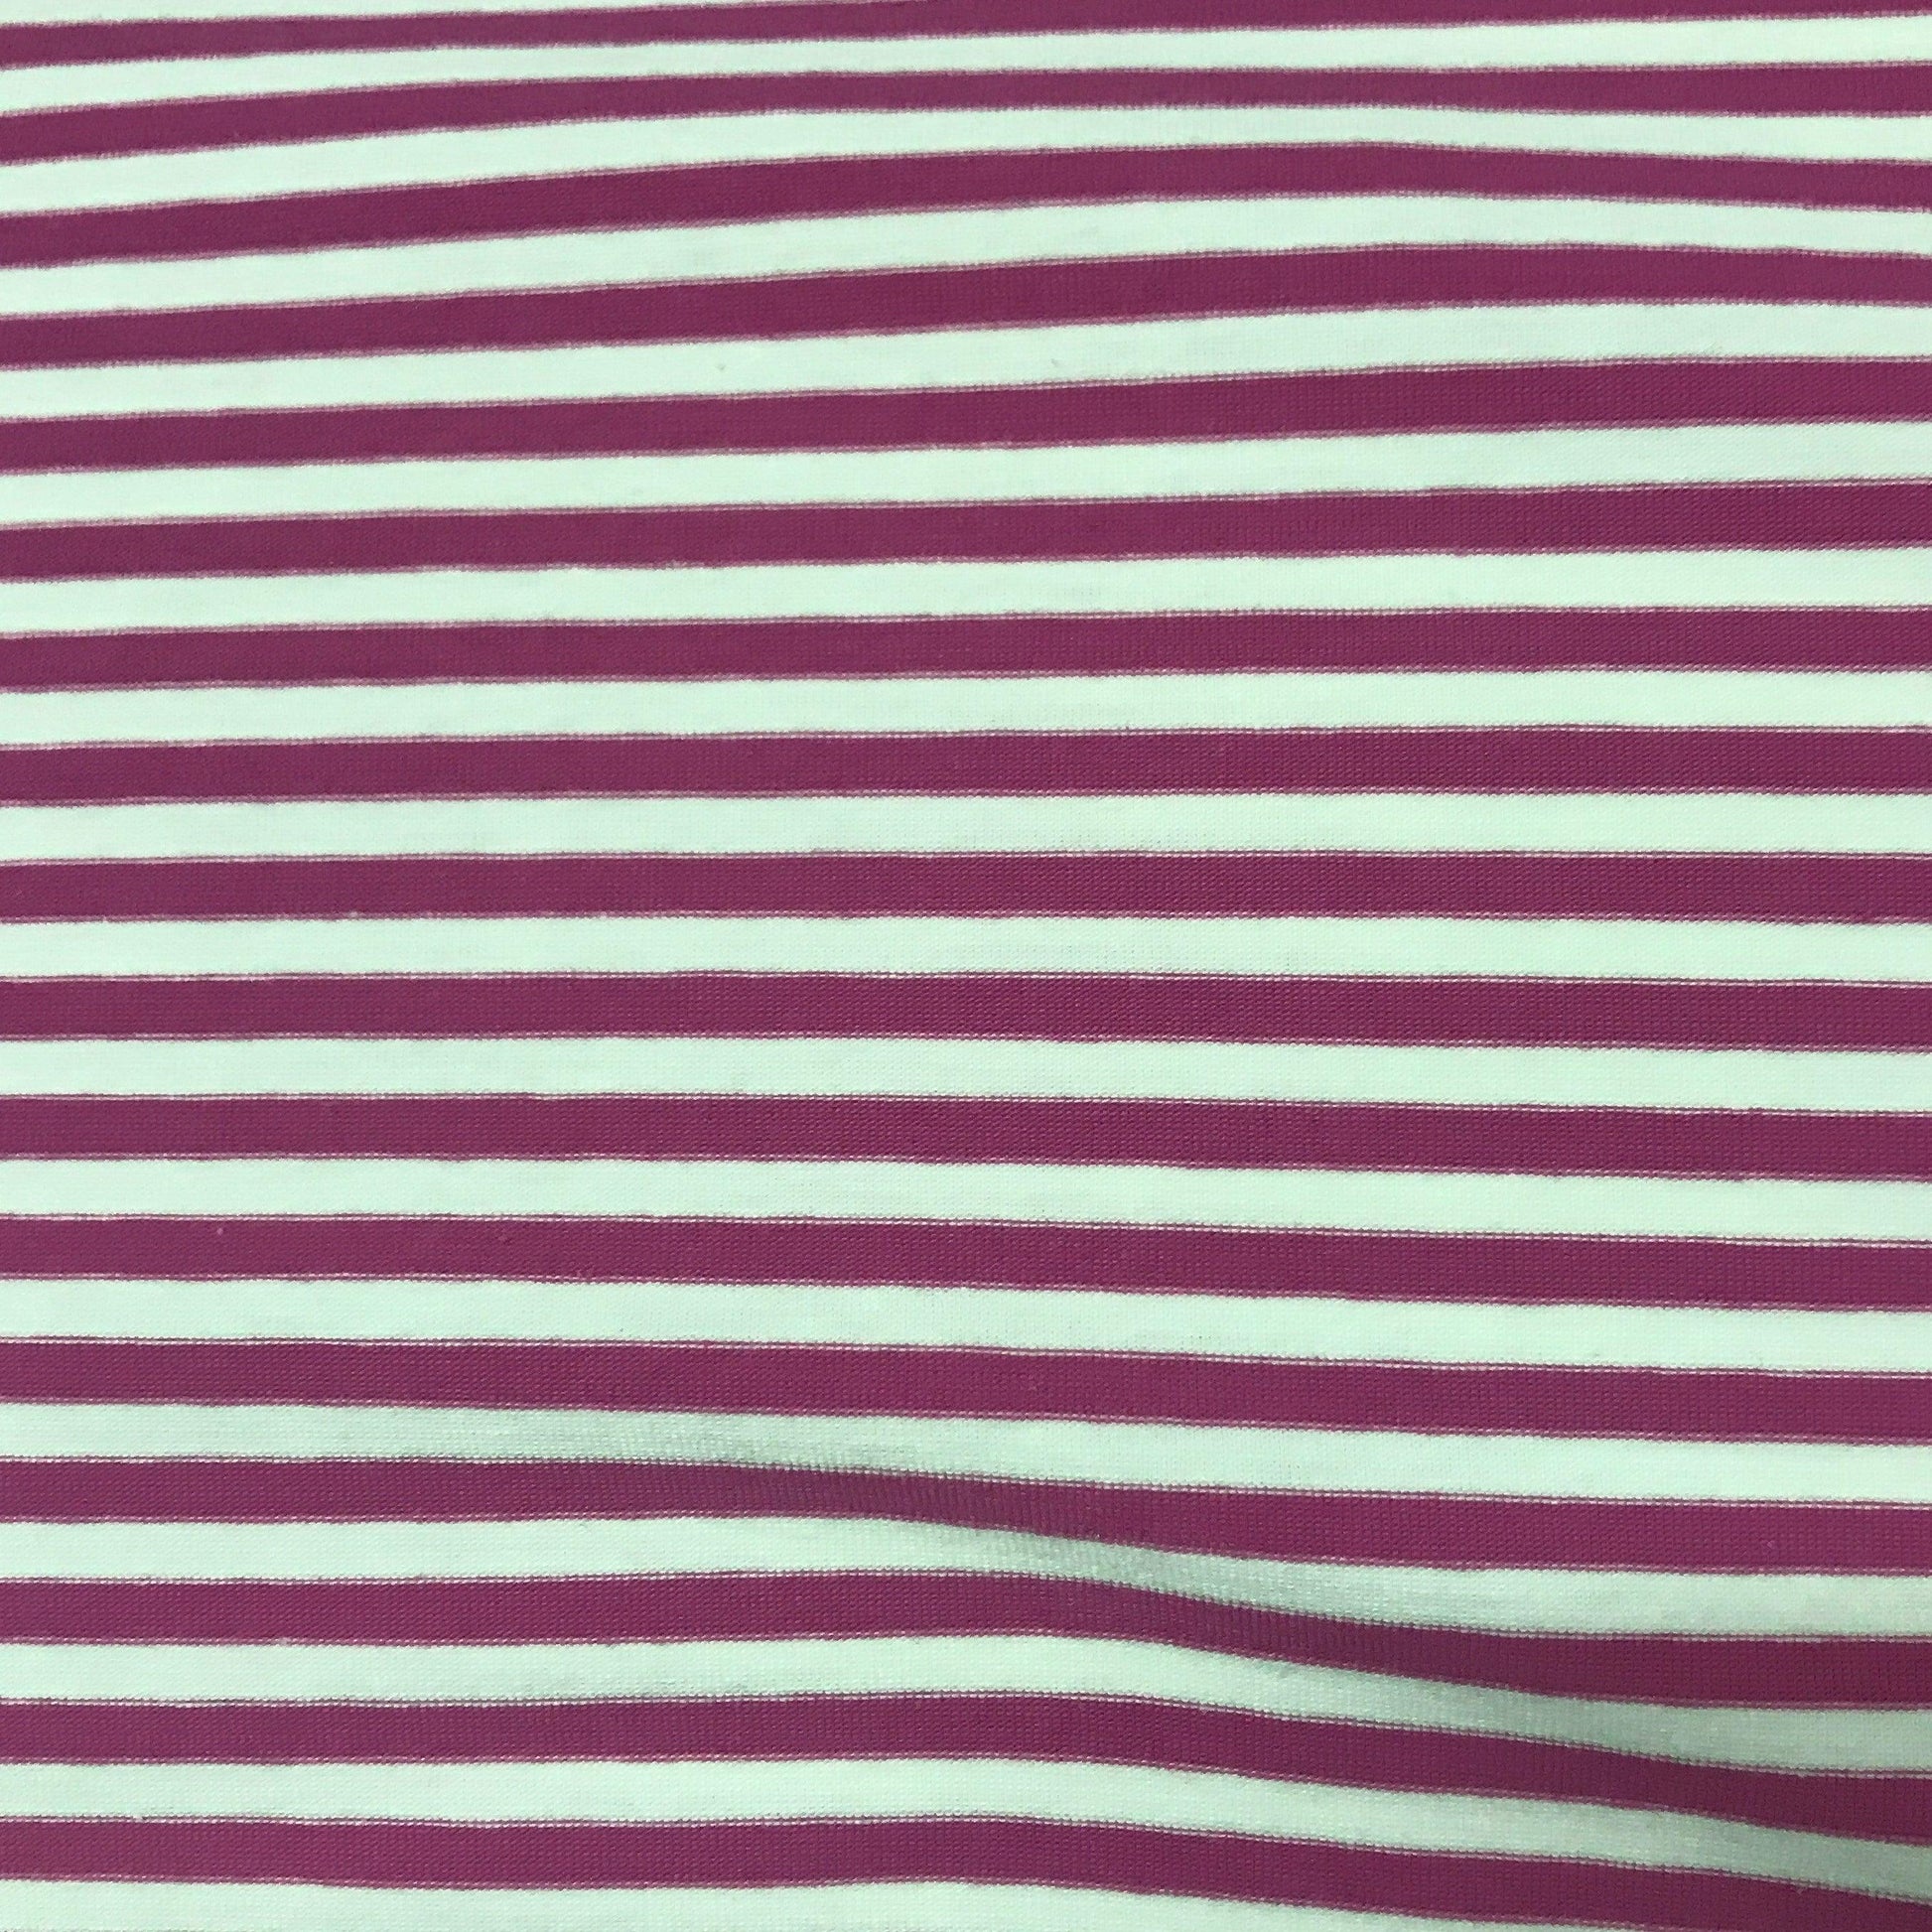 Magenta and White 1/4" Stripe on Cotton/Spandex Jersey